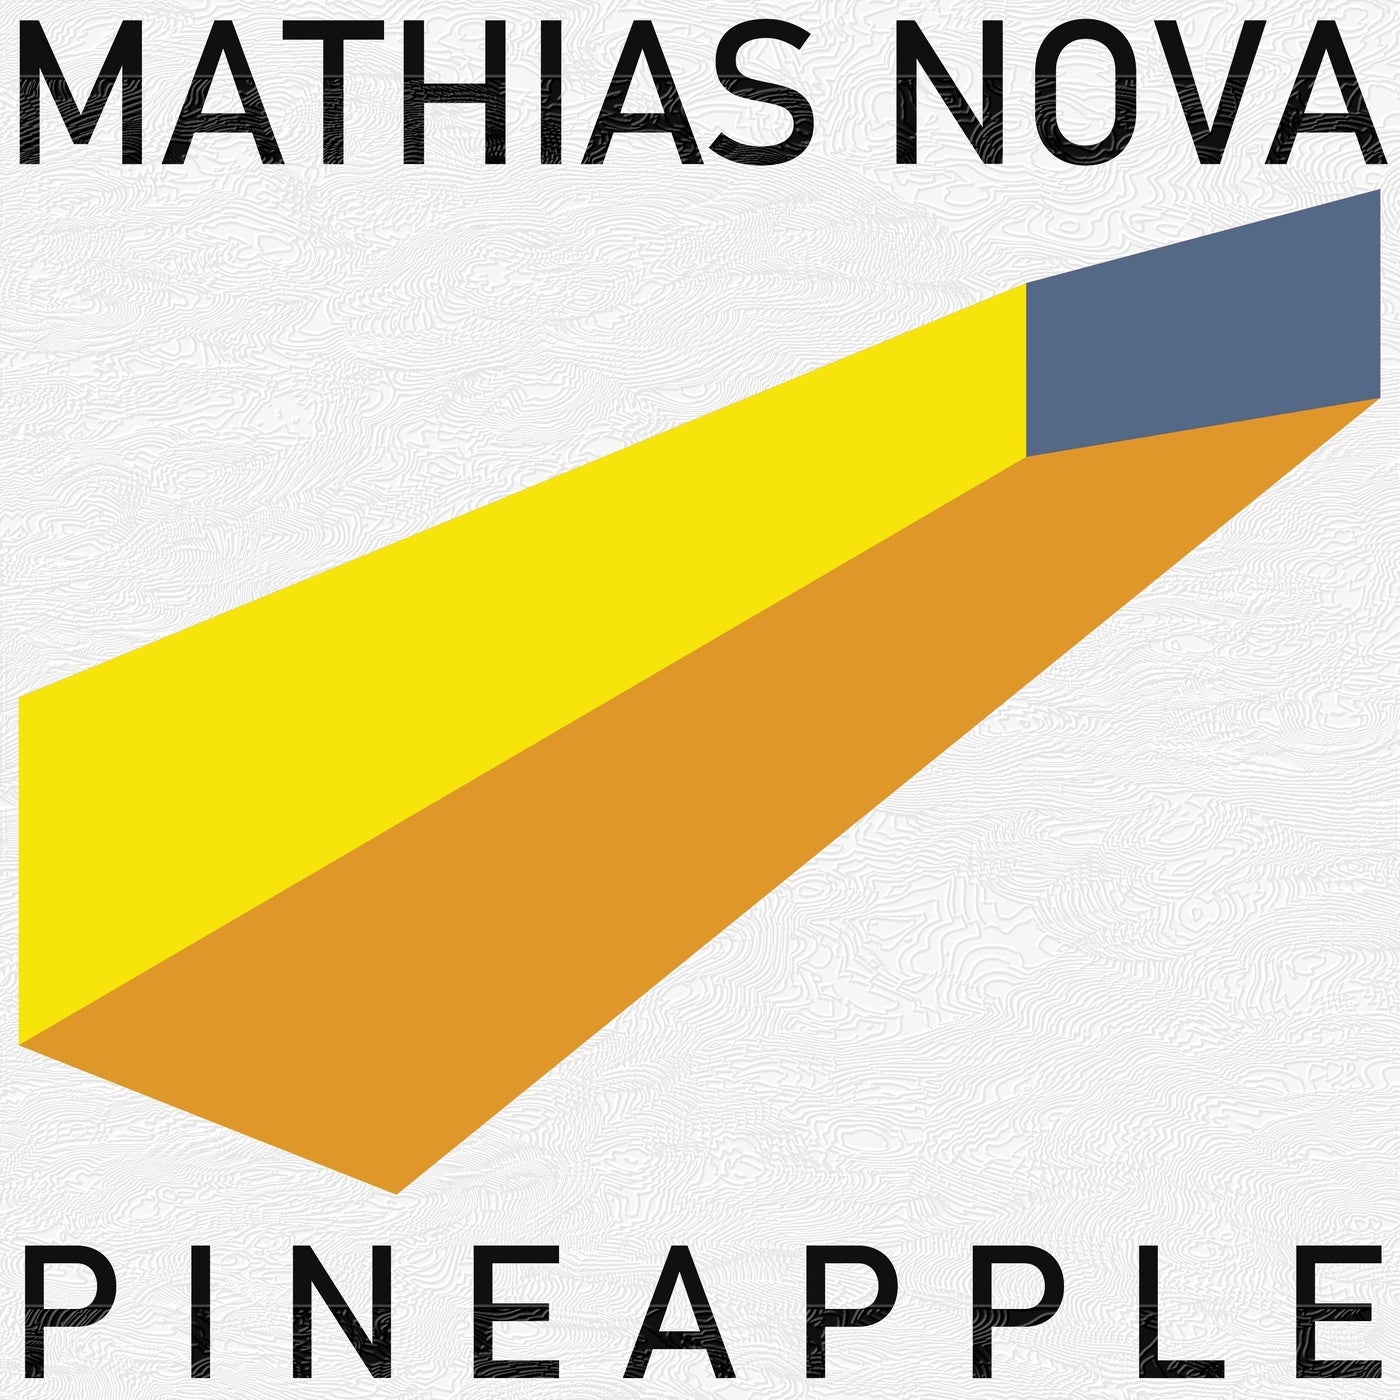 Mathias Nova - Pineapple [Traumuart]